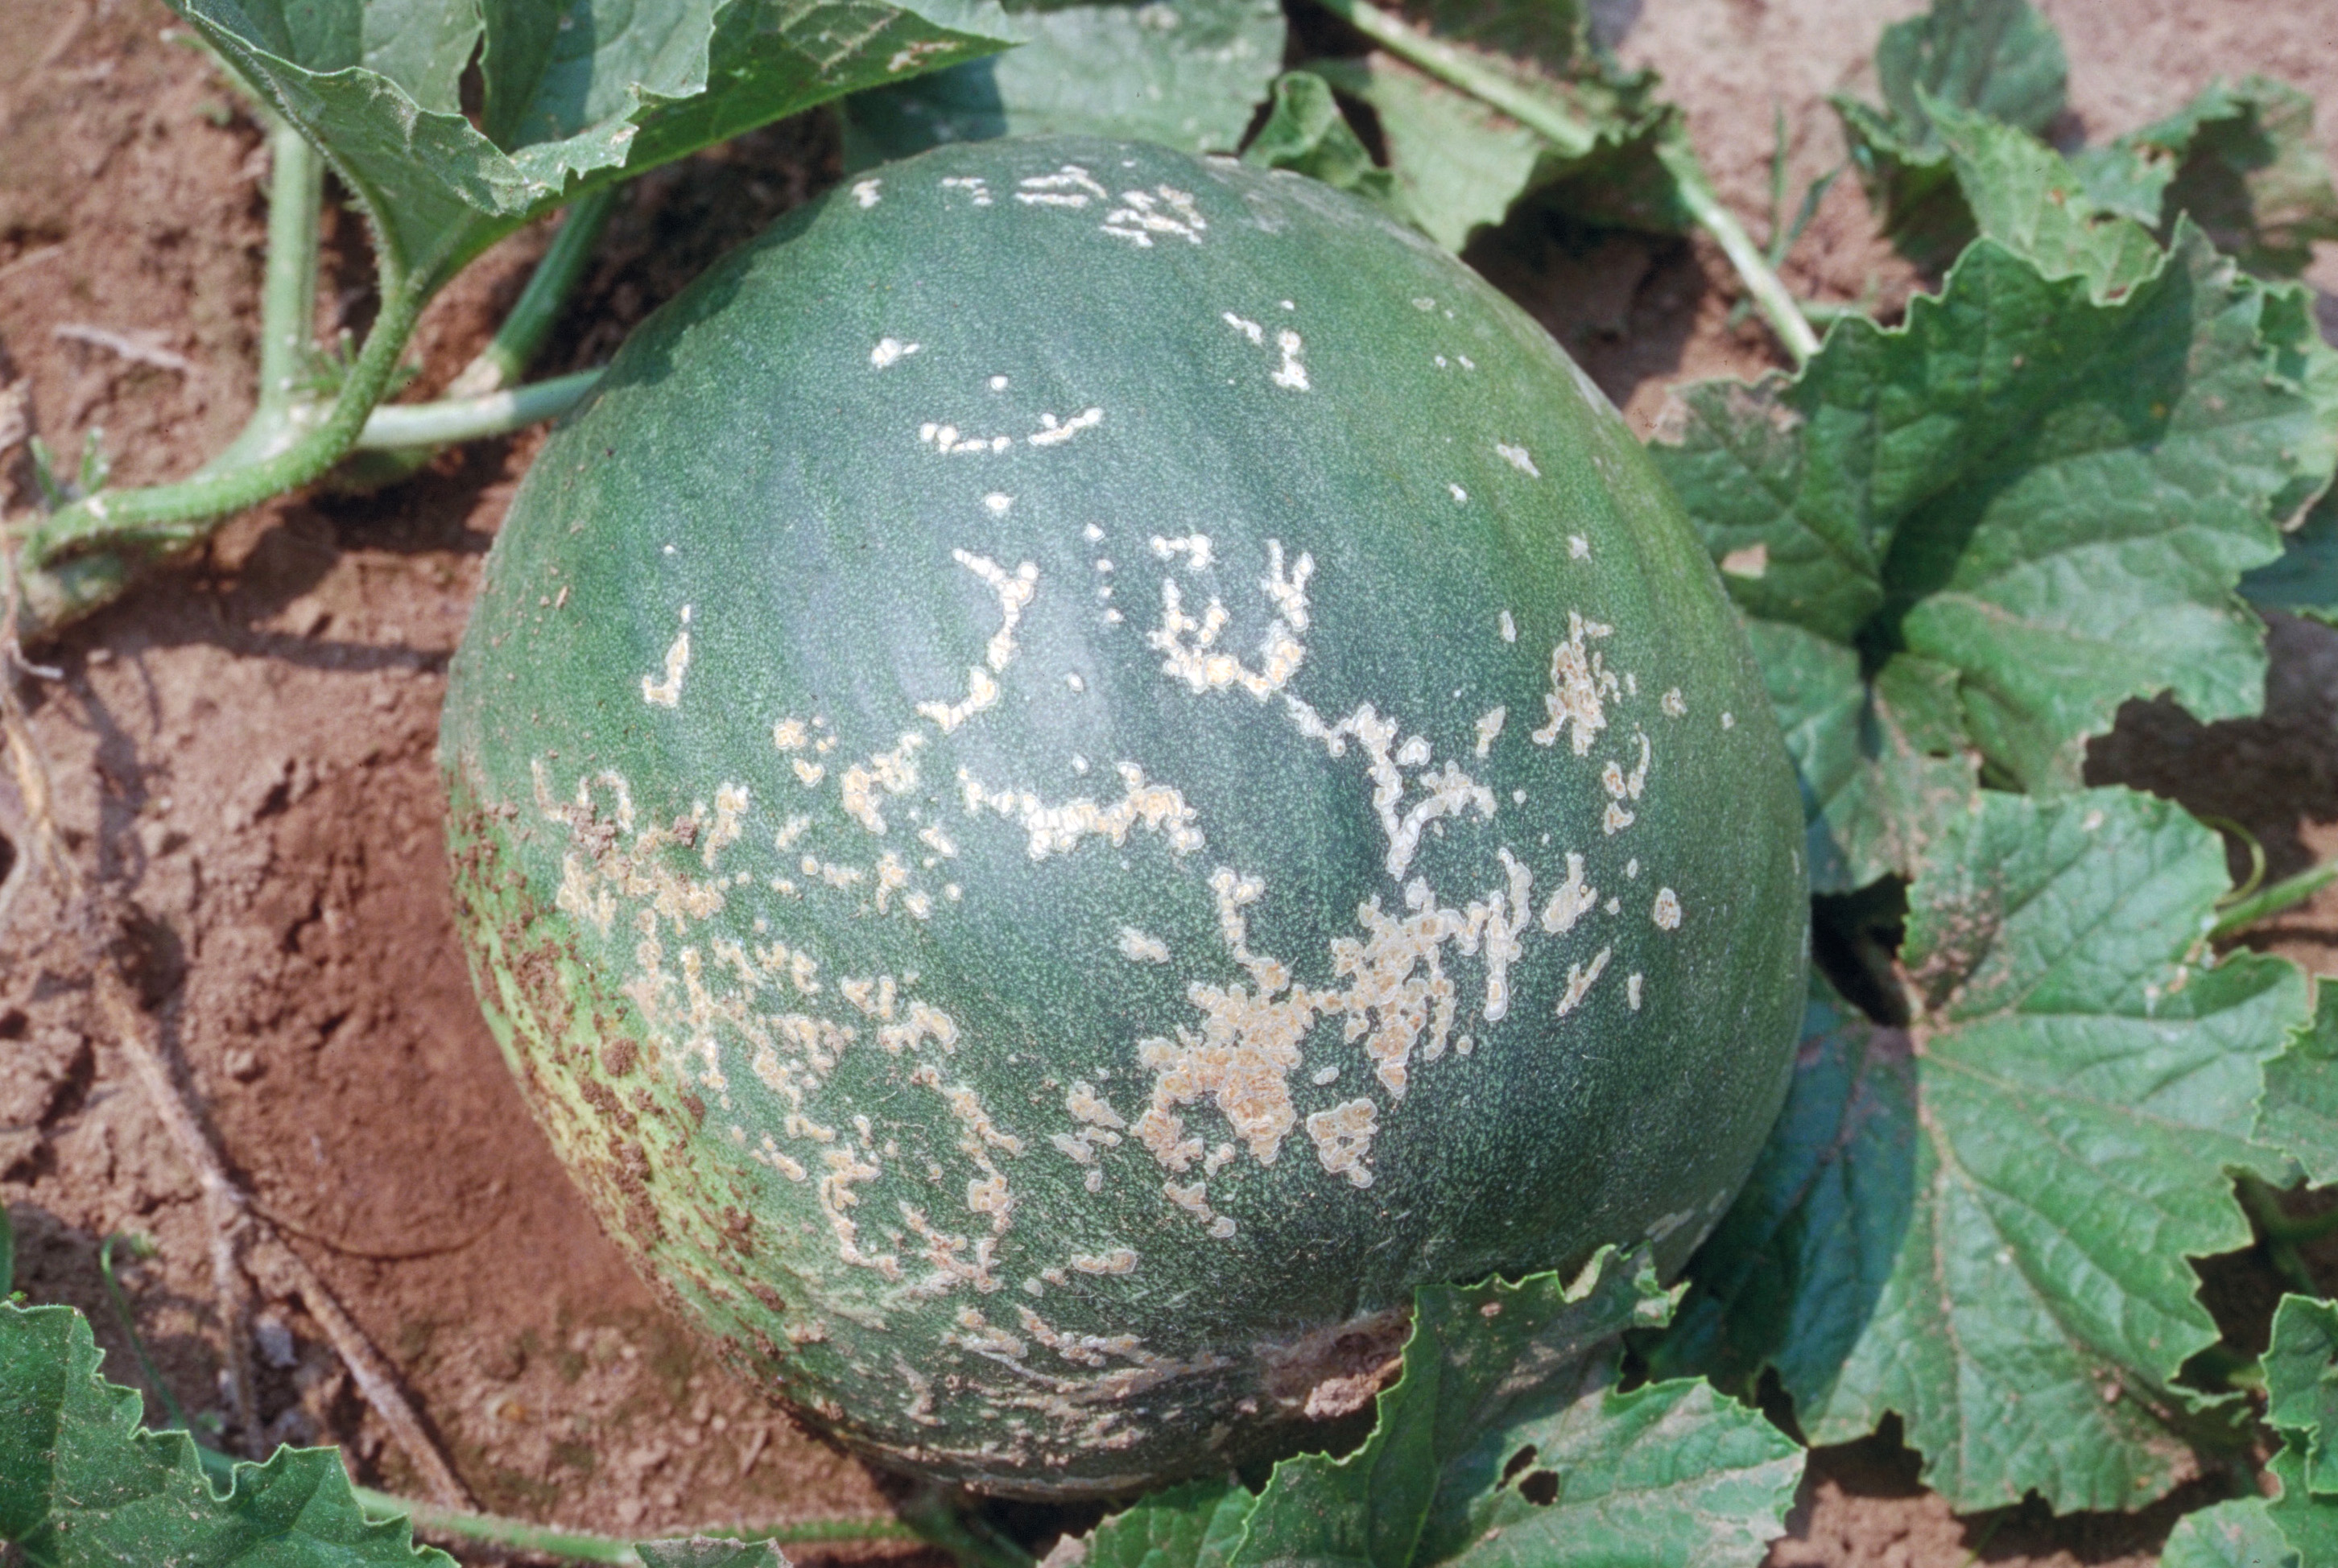 Cucumber beetle damage to melon fruit.